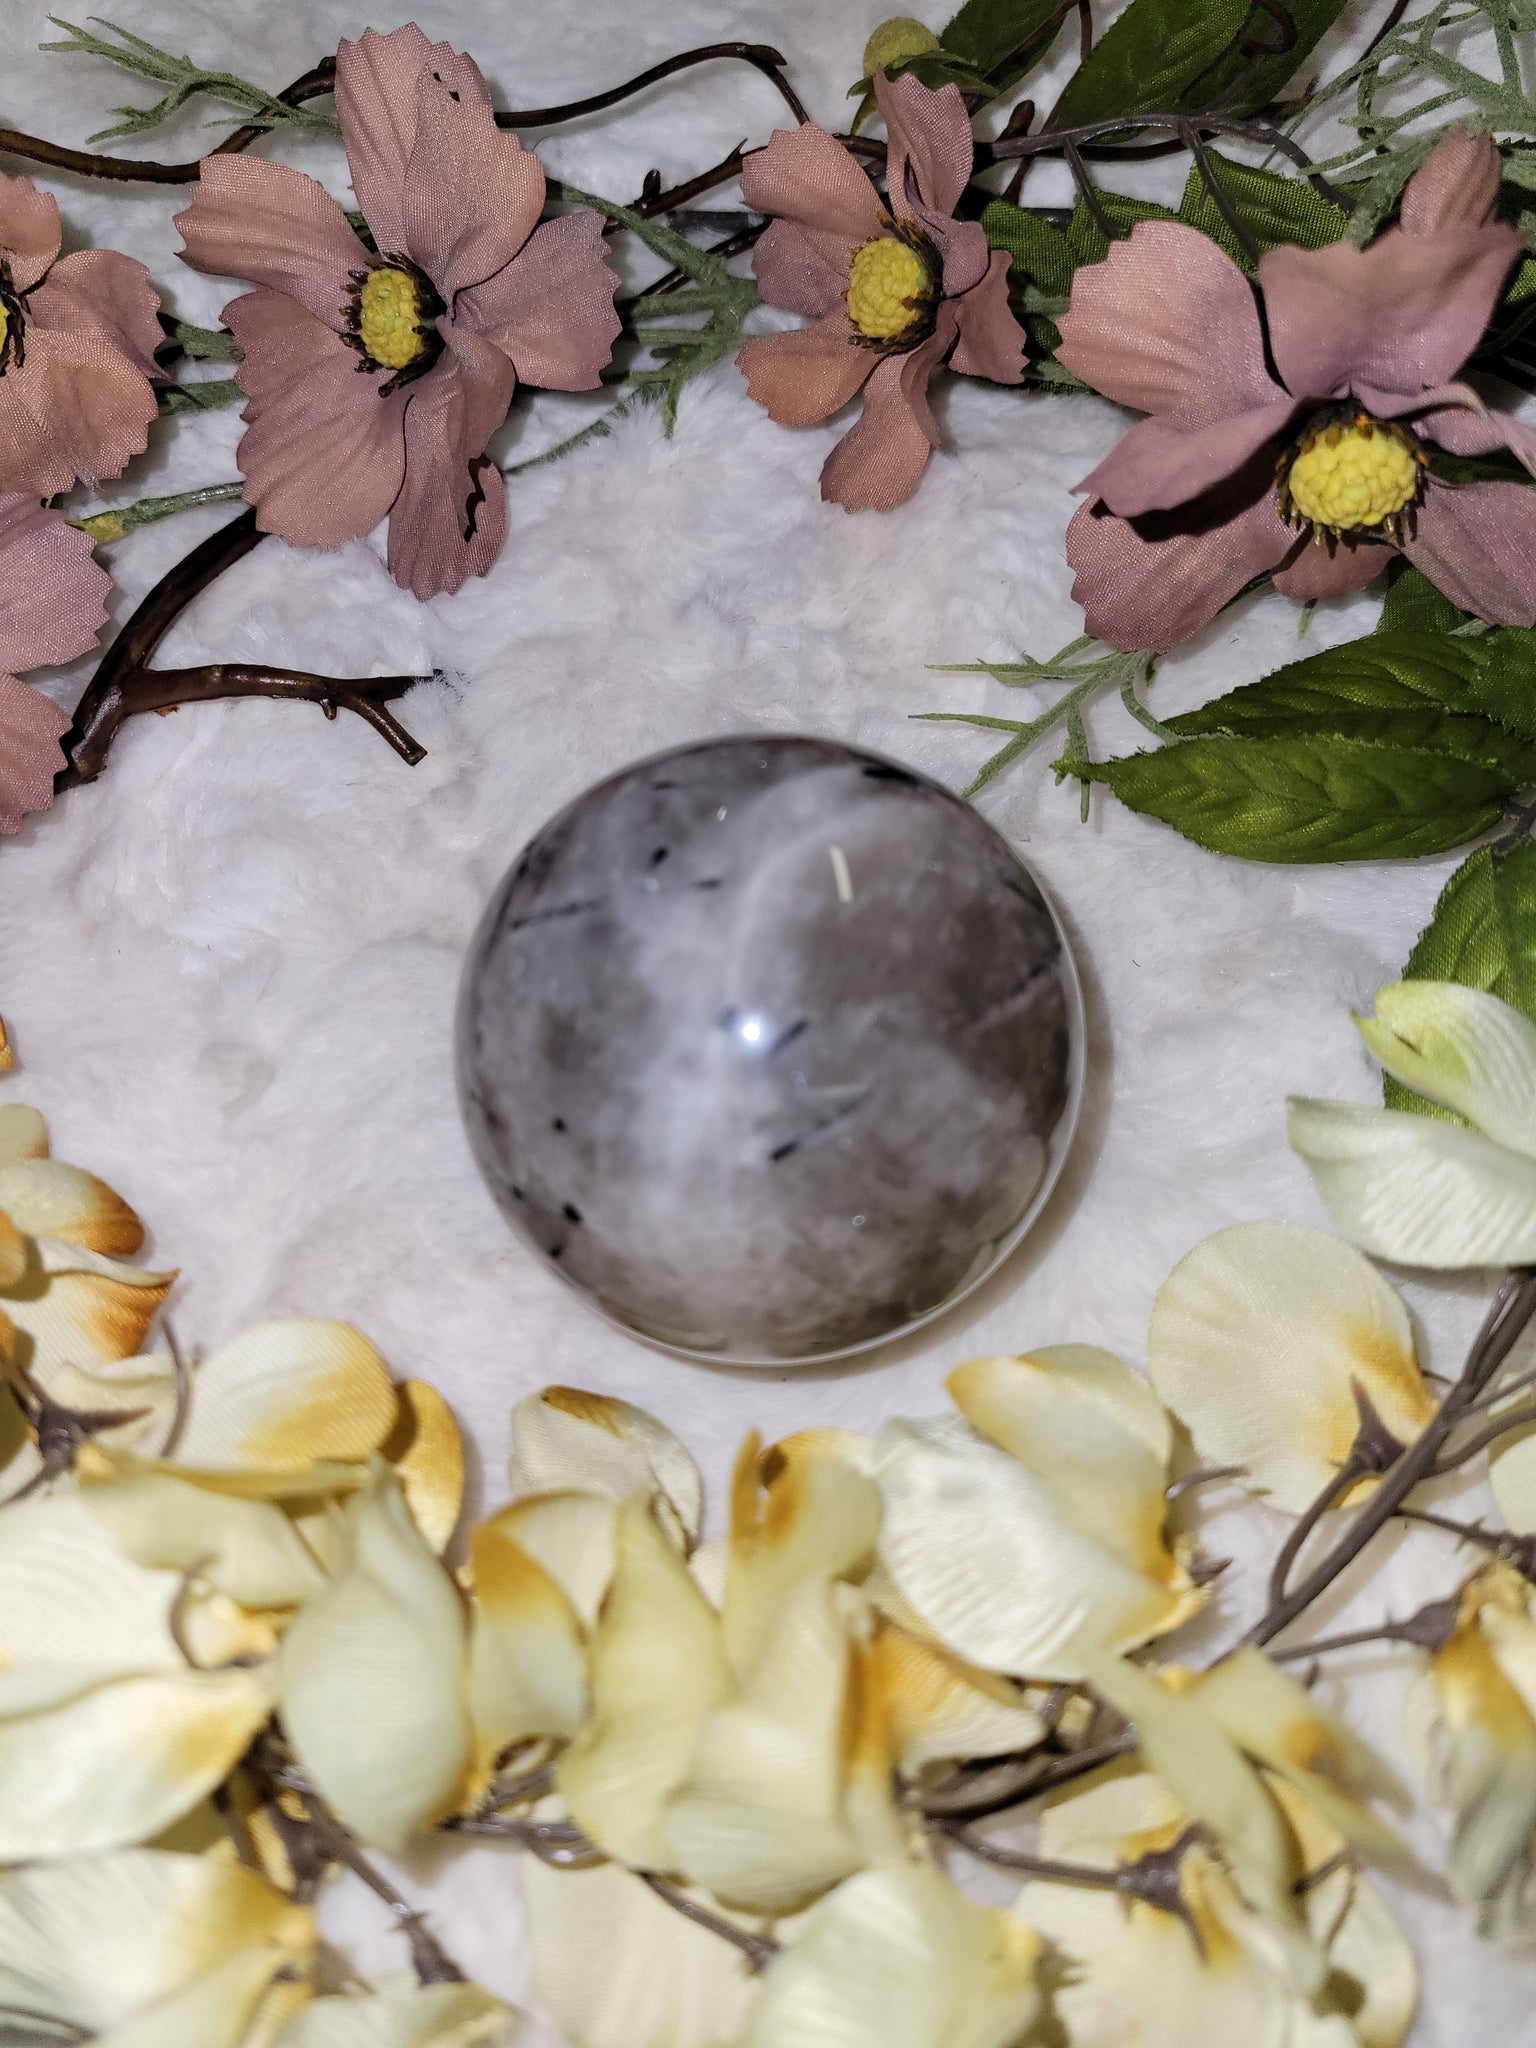 Tourmalated Moonstone Sphere